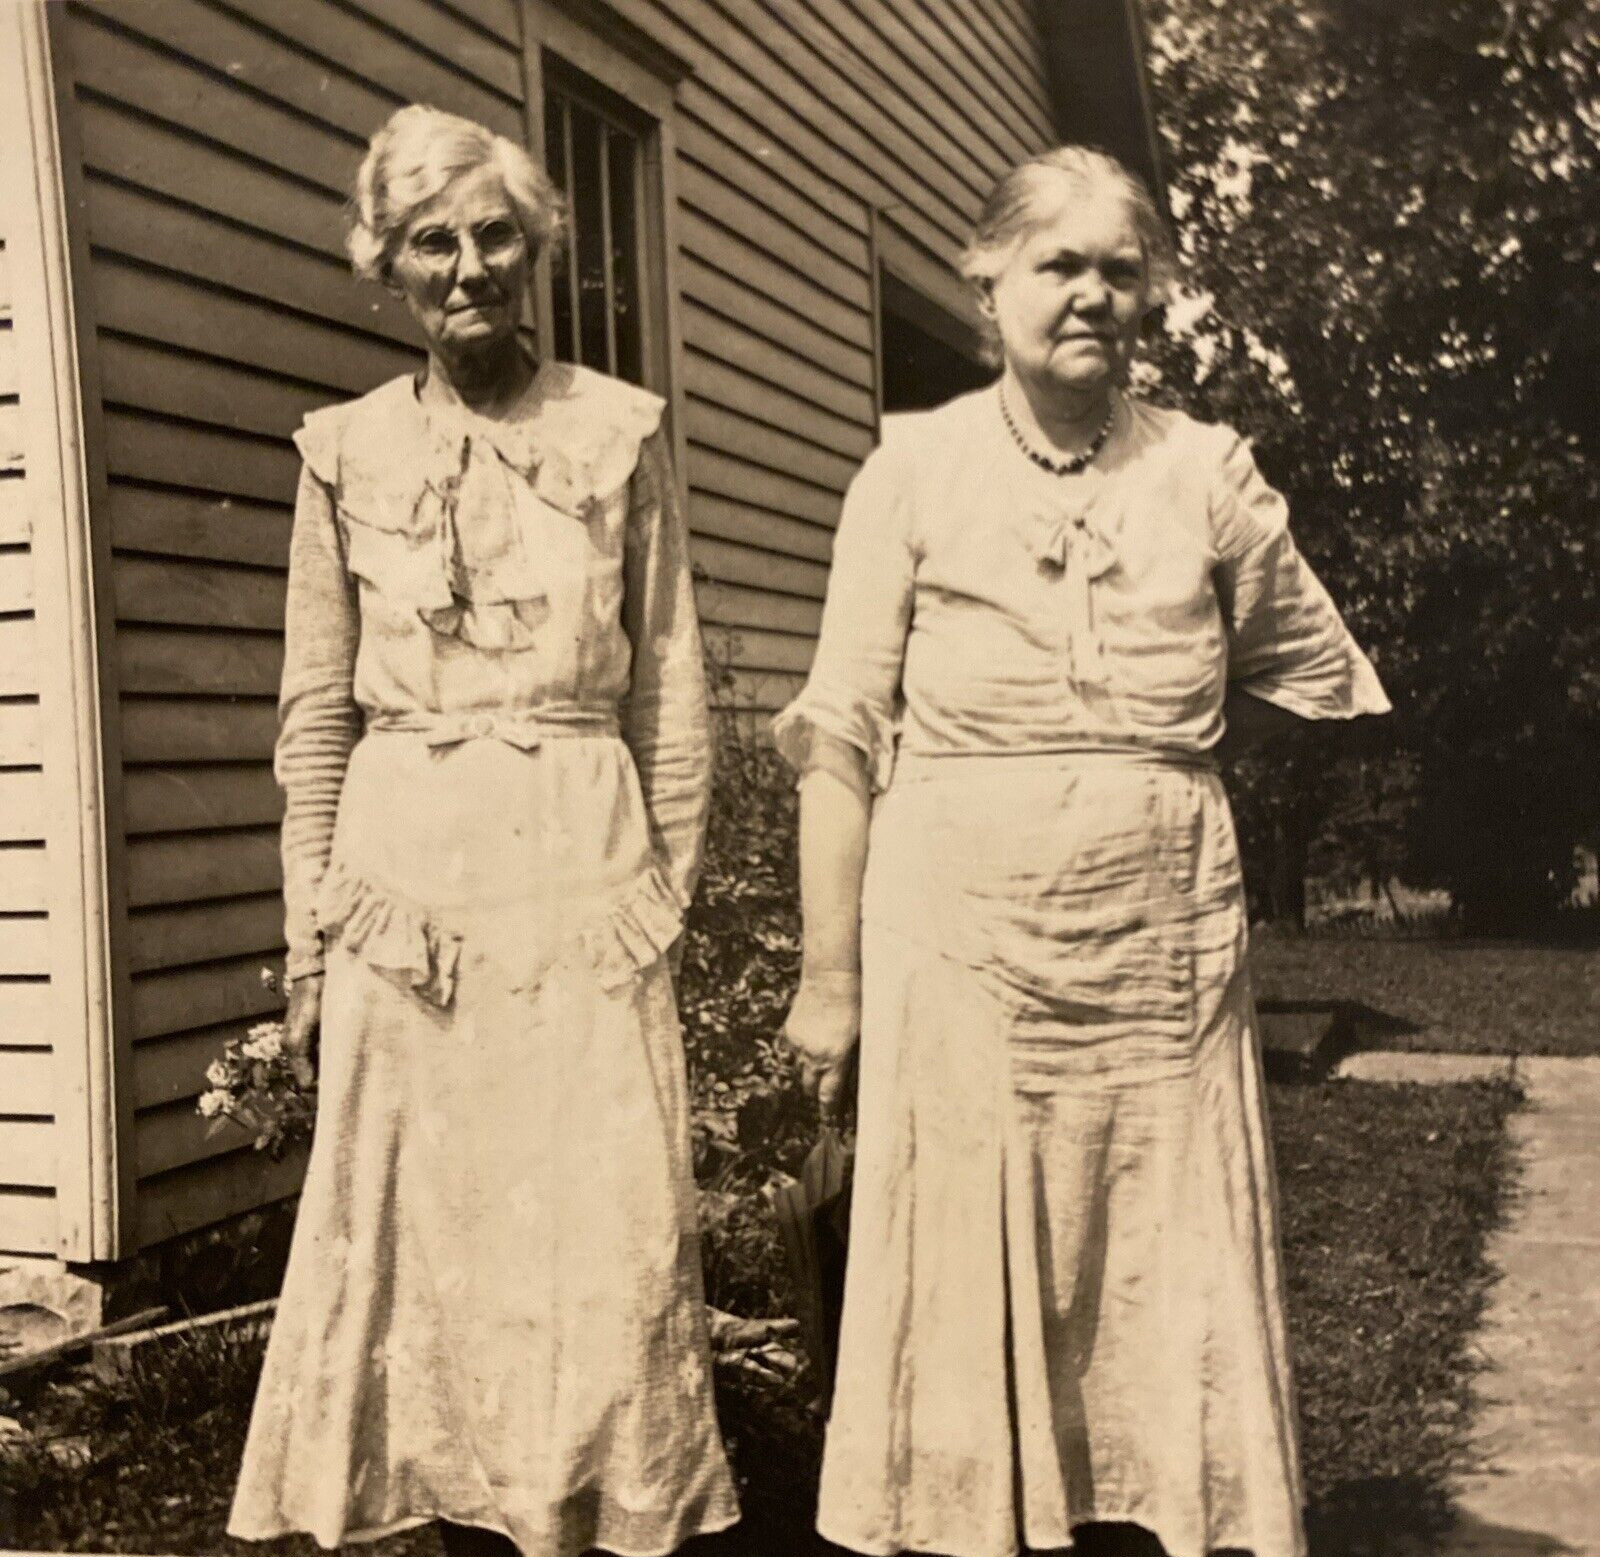 1930s Older Women Ladies White Dresses Fashion Seniors Original Old Photo P12d10